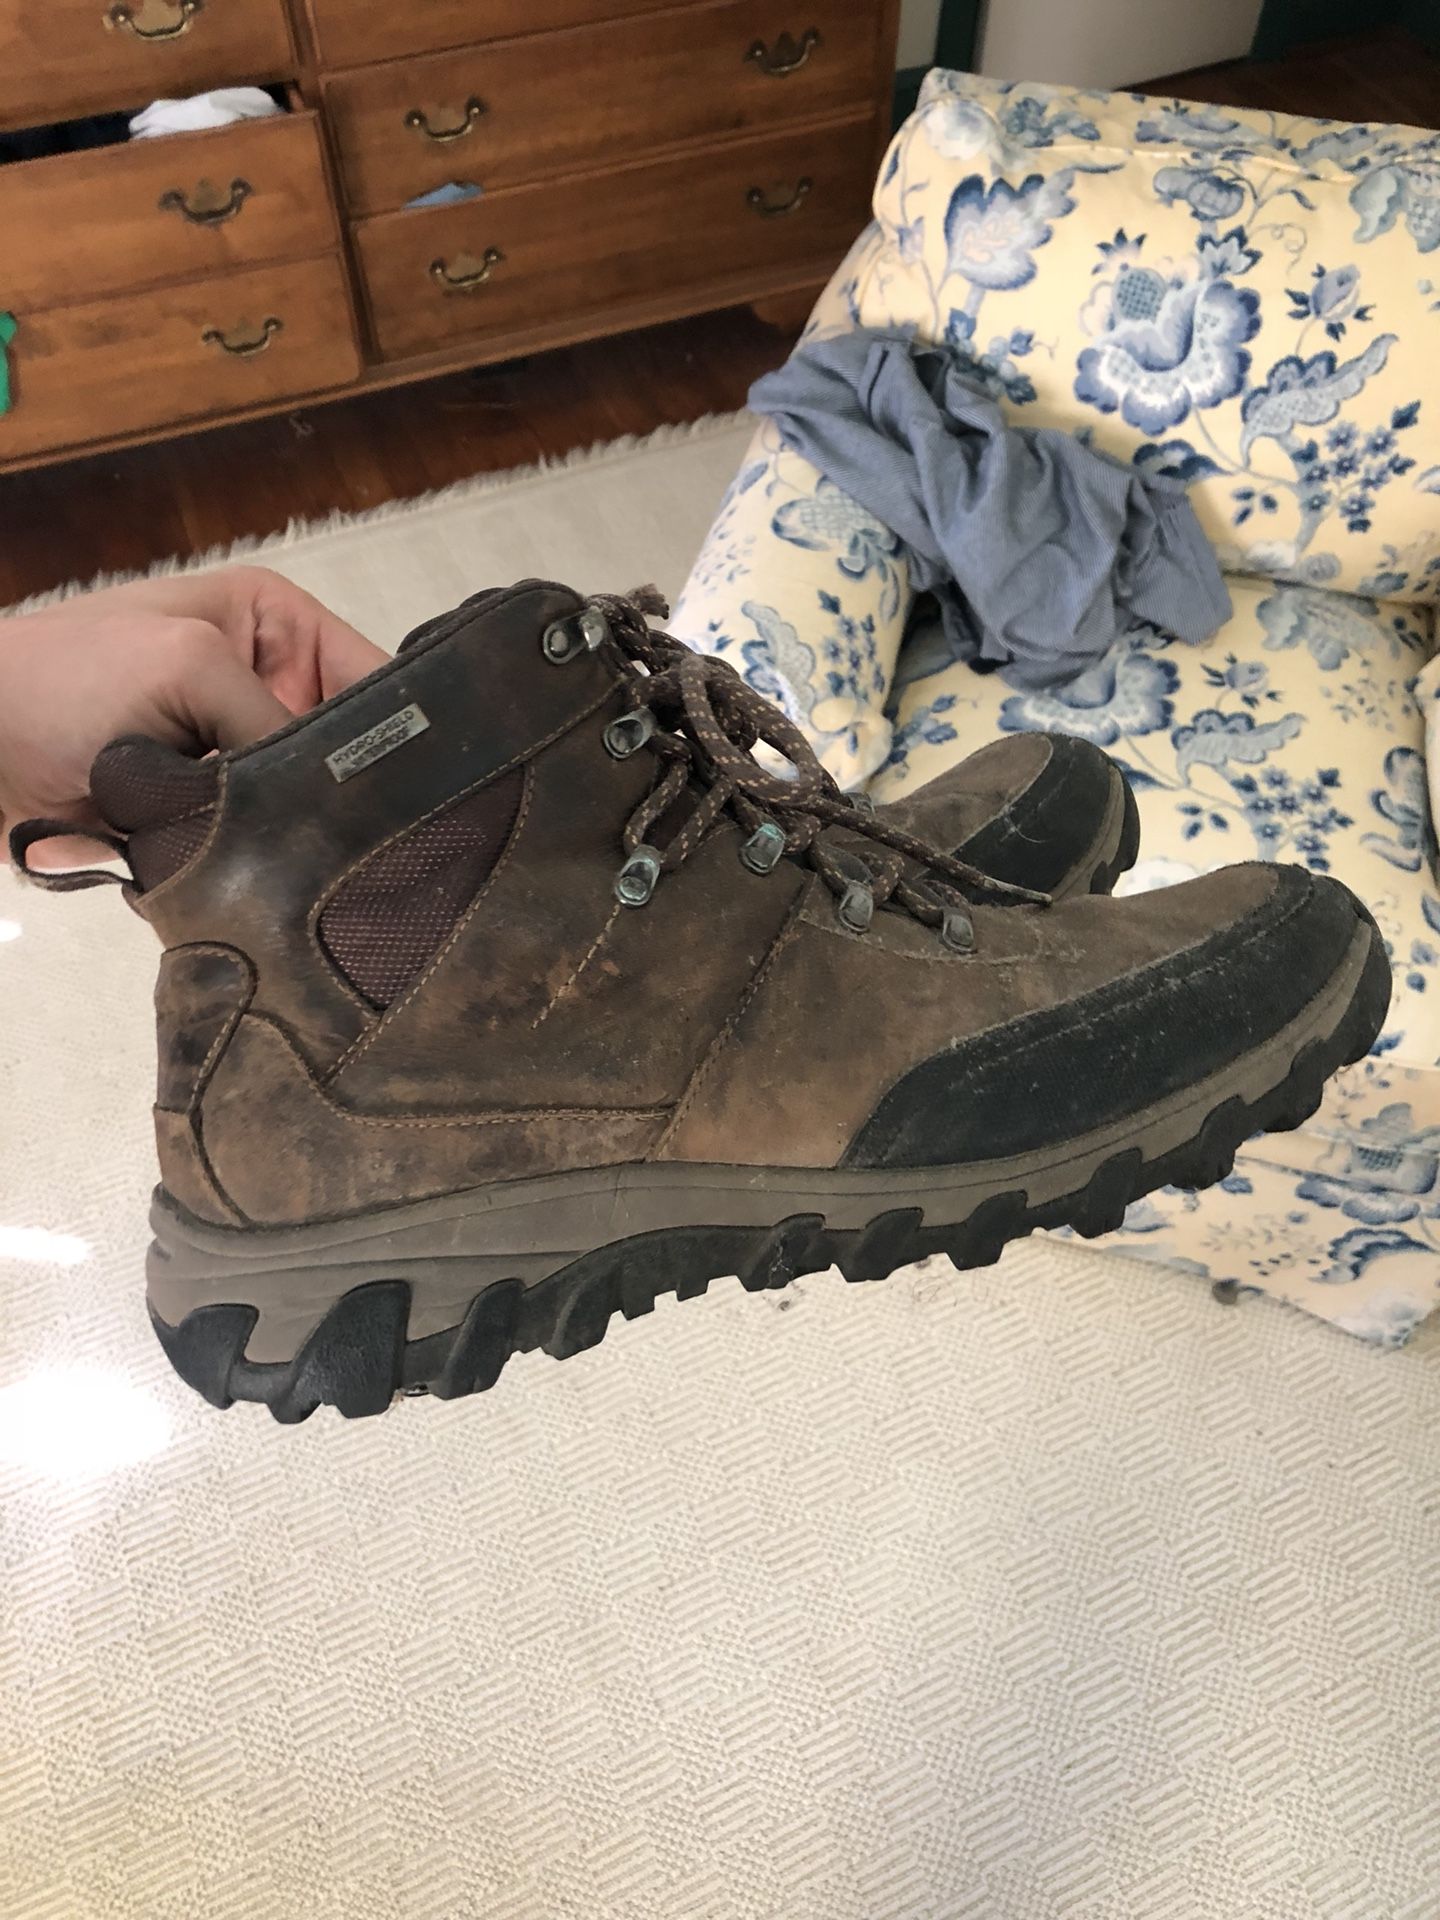 Waterproof hiking boots, size 10.5